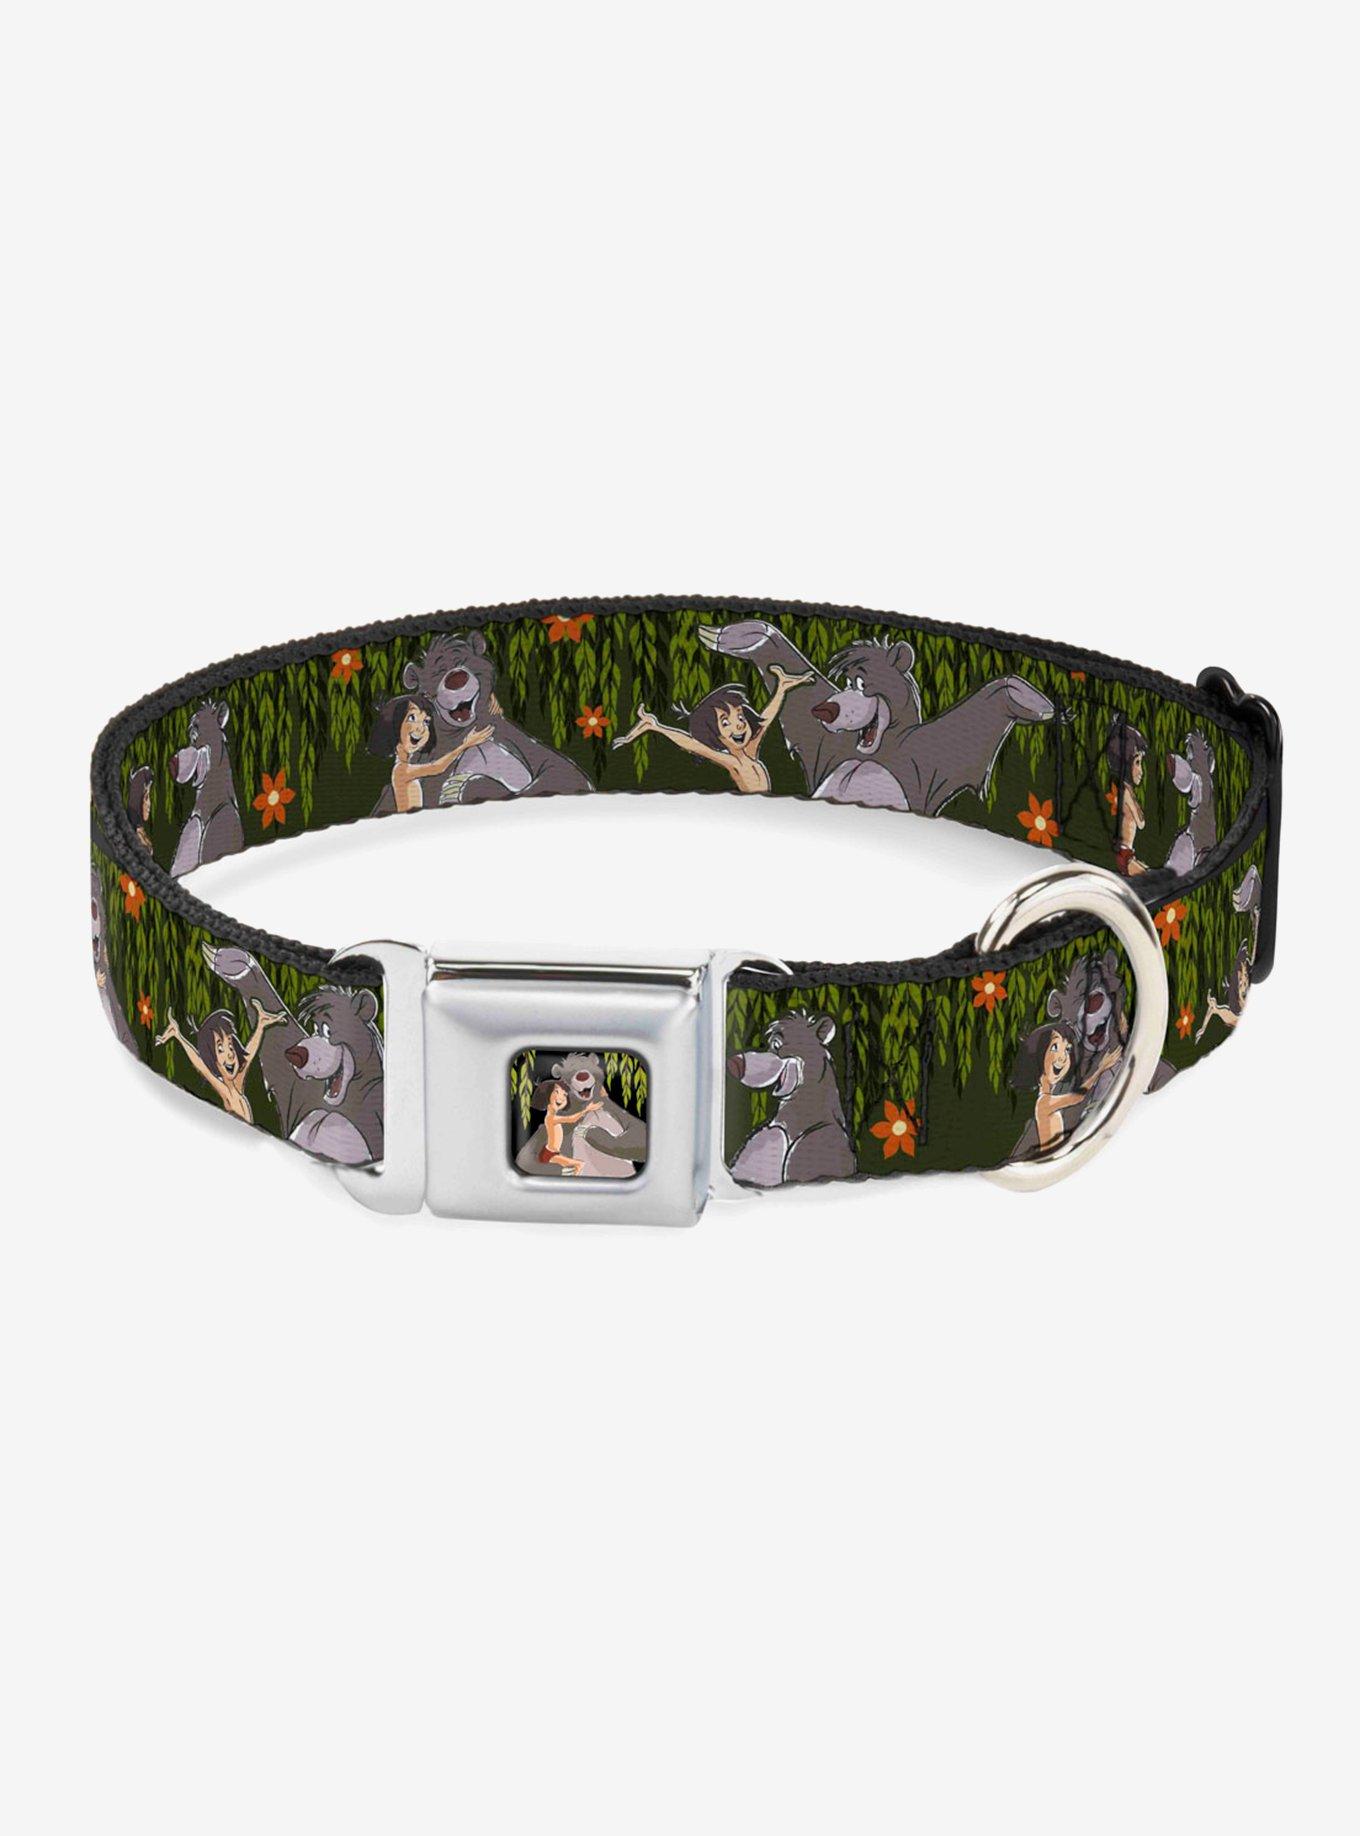 Disney The Jungle Book Mowgli Baloo Seatbelt Buckle Dog Collar, GREEN, hi-res